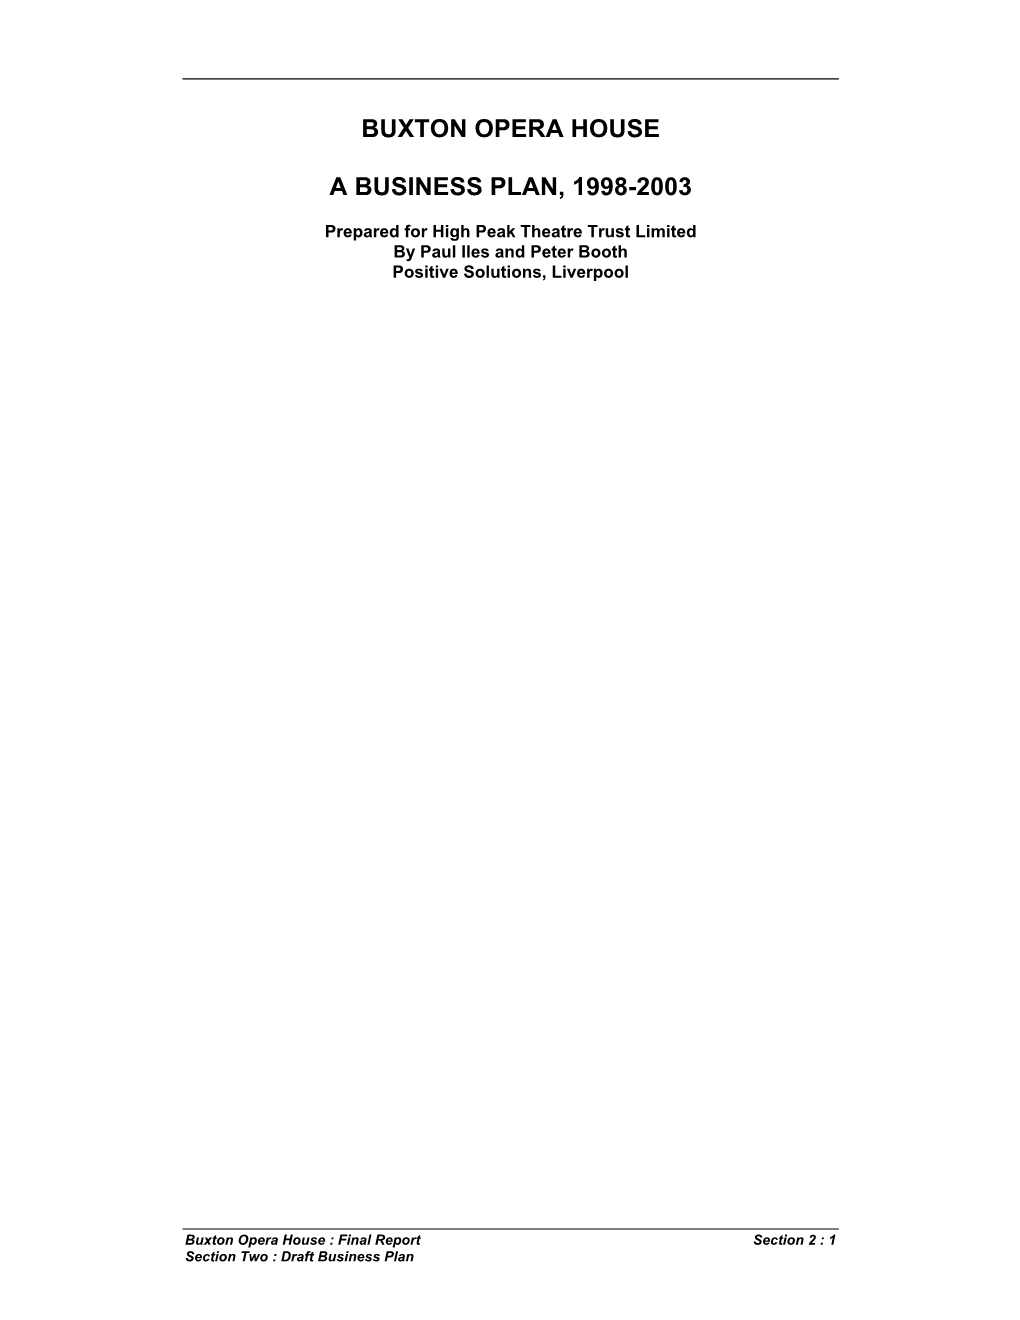 Buxton Opera House Business Plan, 1998